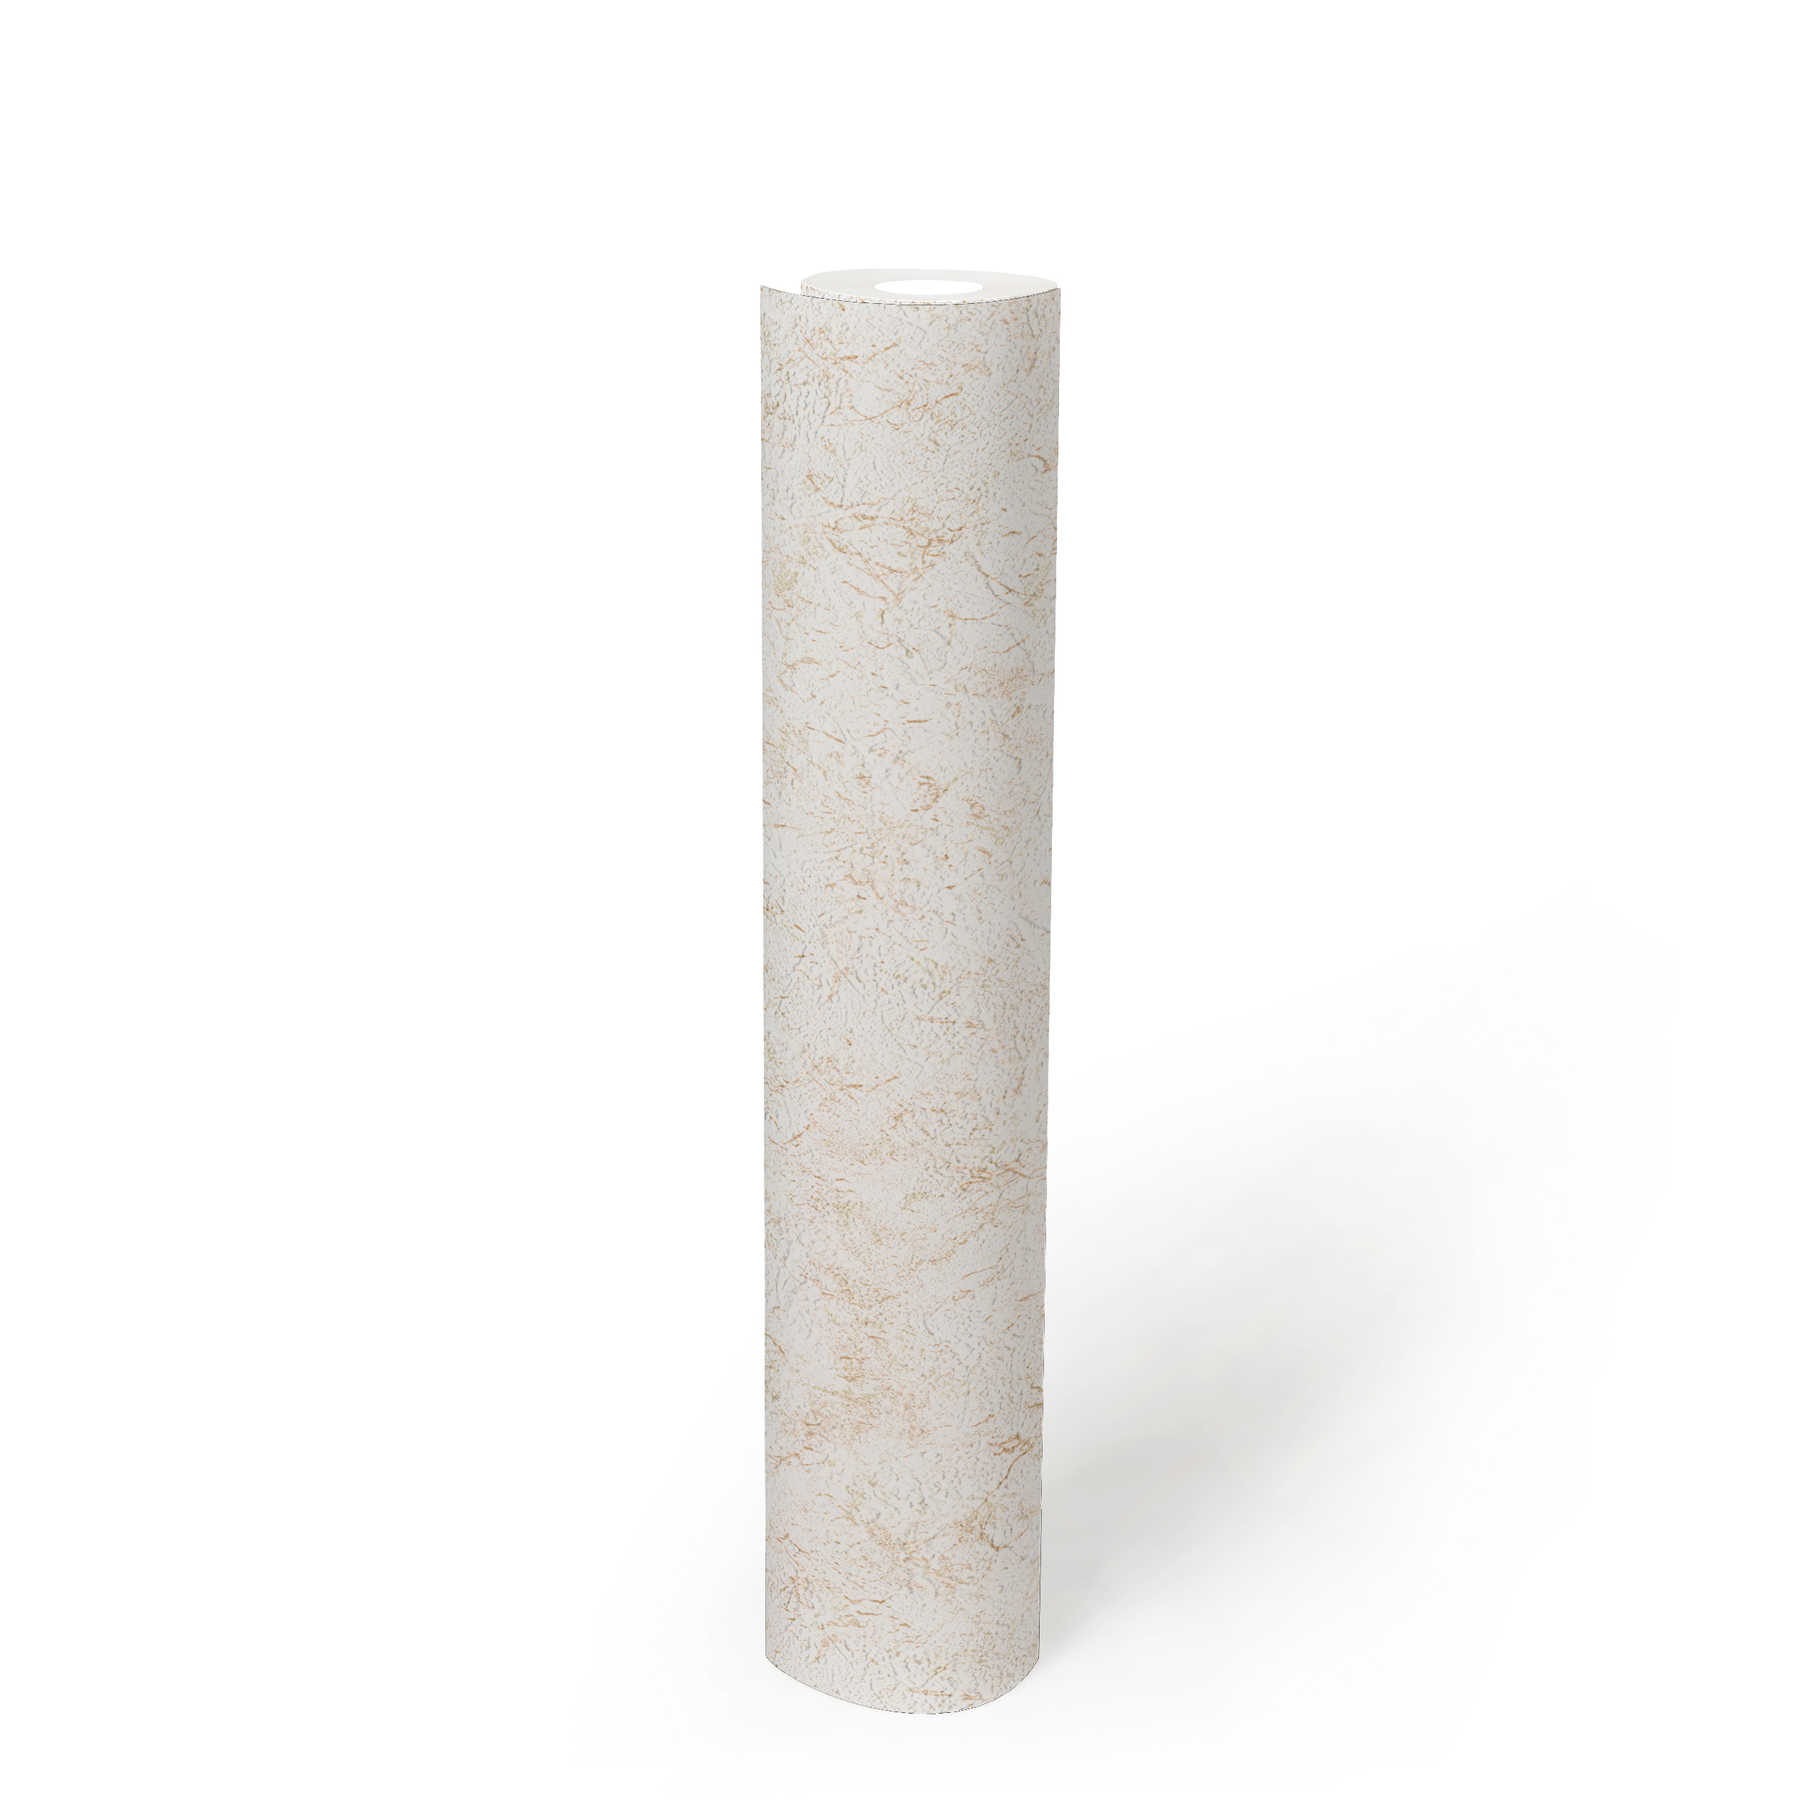             Strukturtapete Steinoptik marmoriert – Braun
        